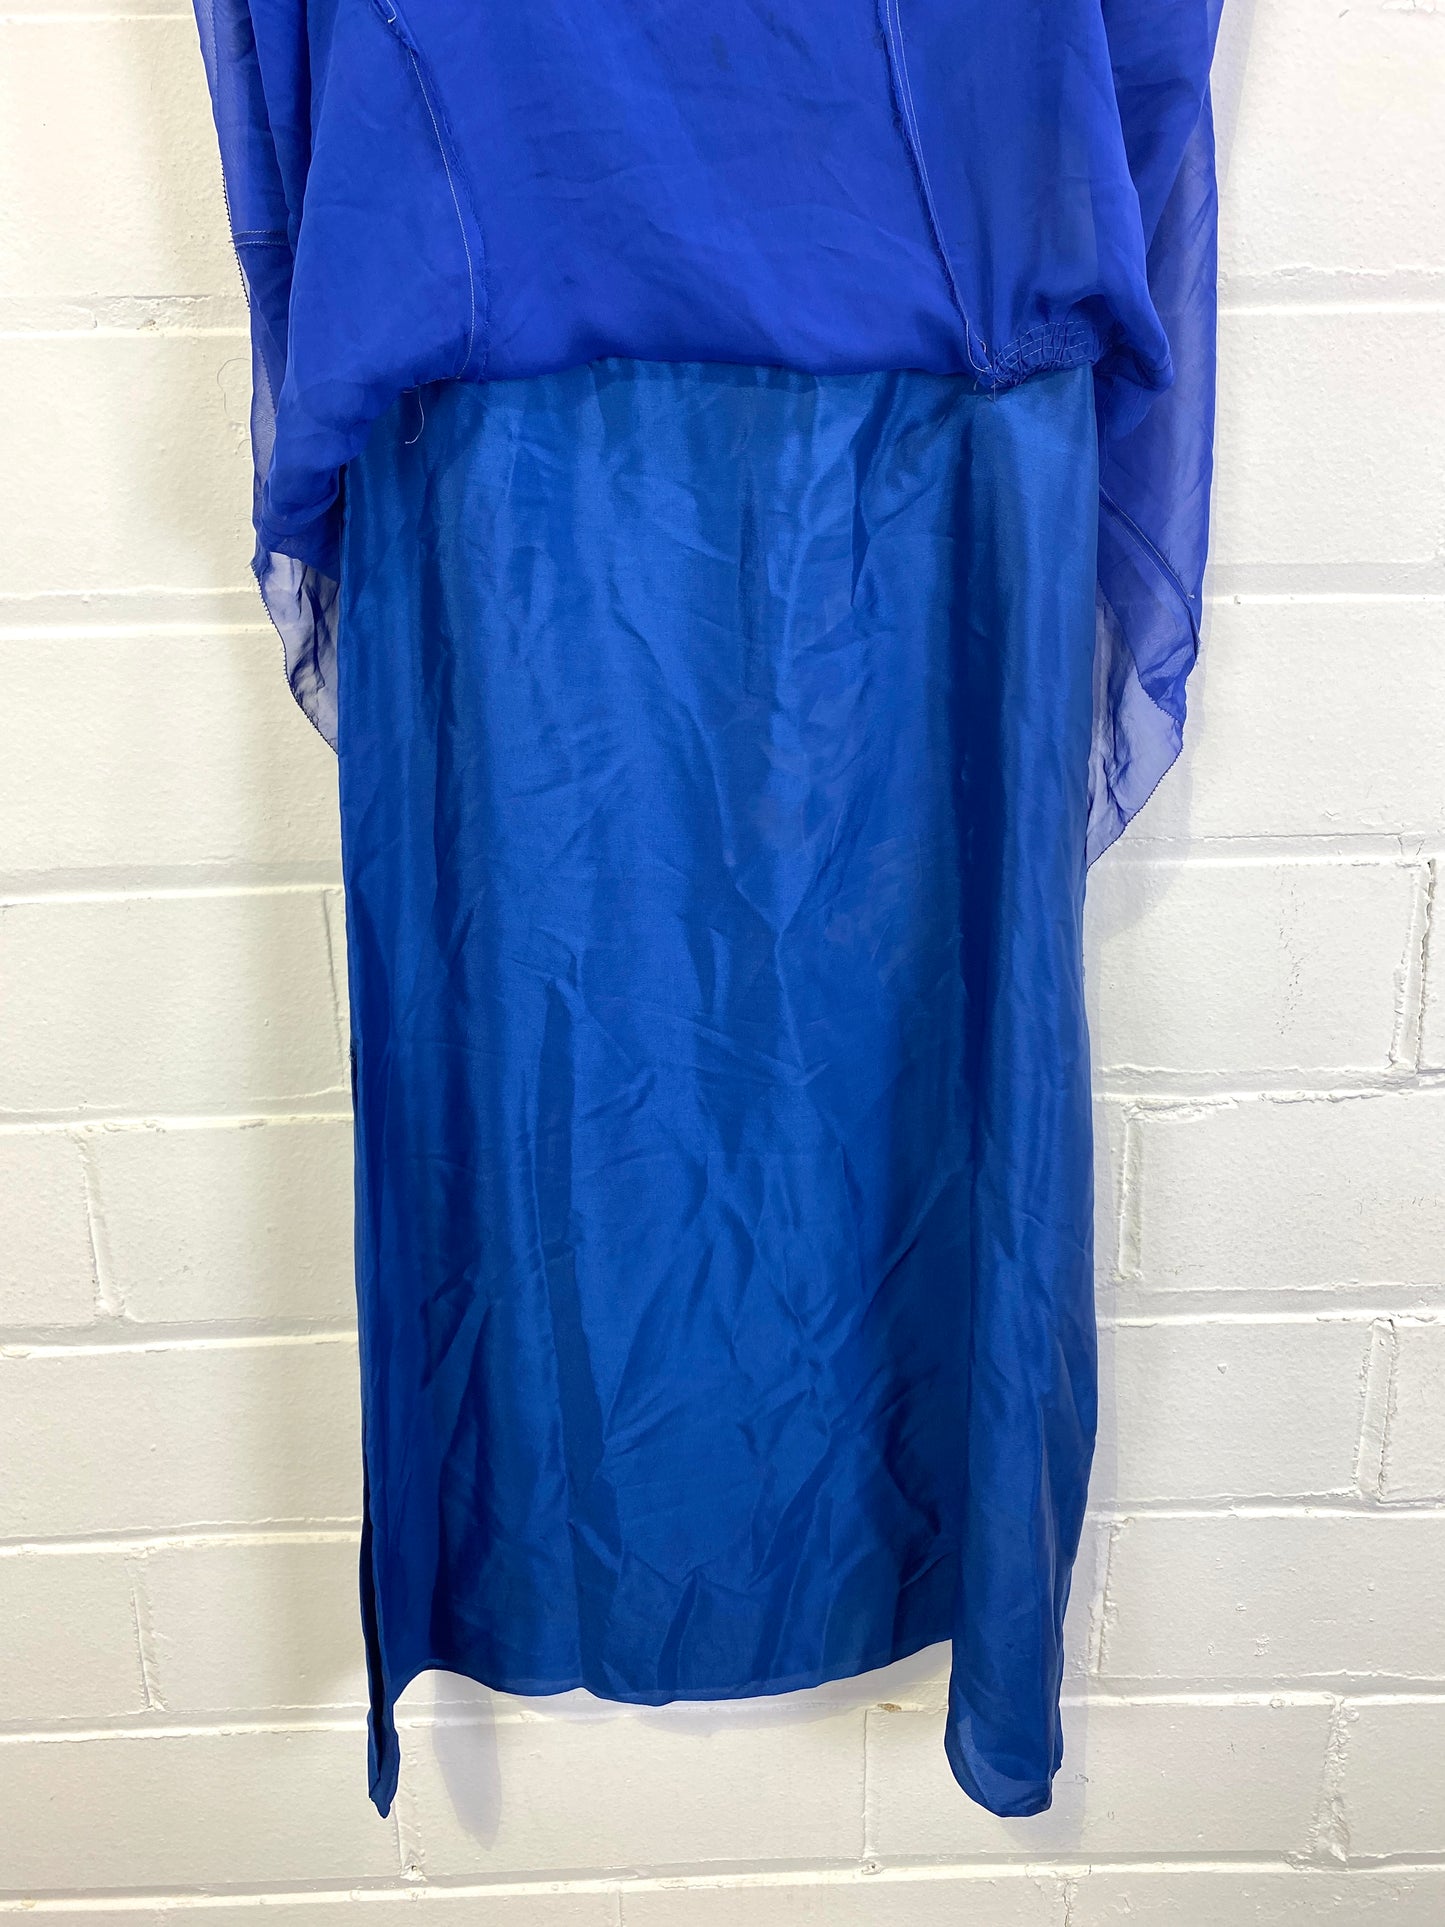 Vintage 1930s Royal Blue Silk Chiffon Dress, B32